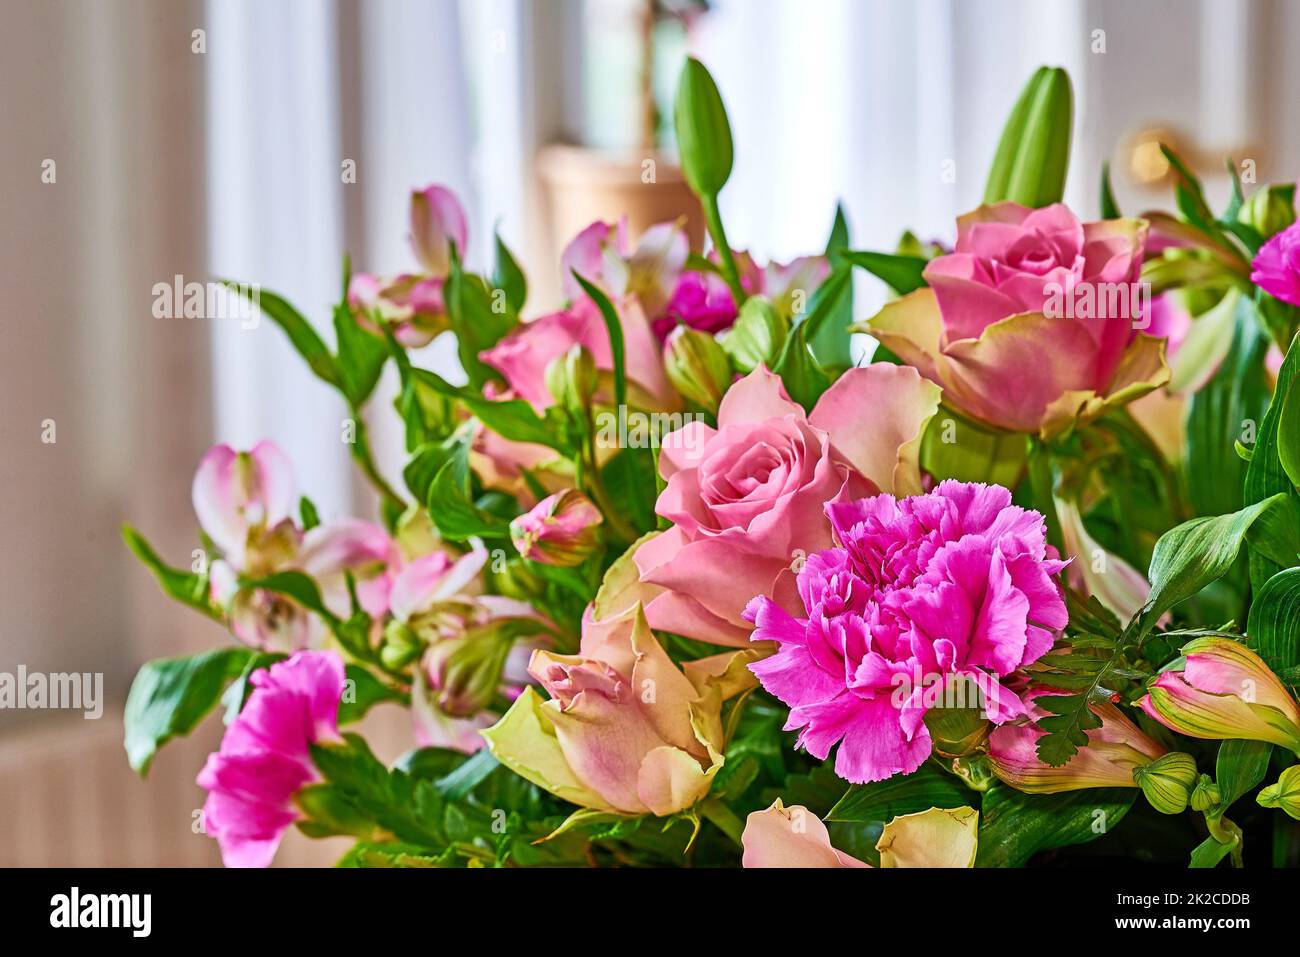 Todo tipo de flores fotografías e imágenes de alta resolución - Alamy